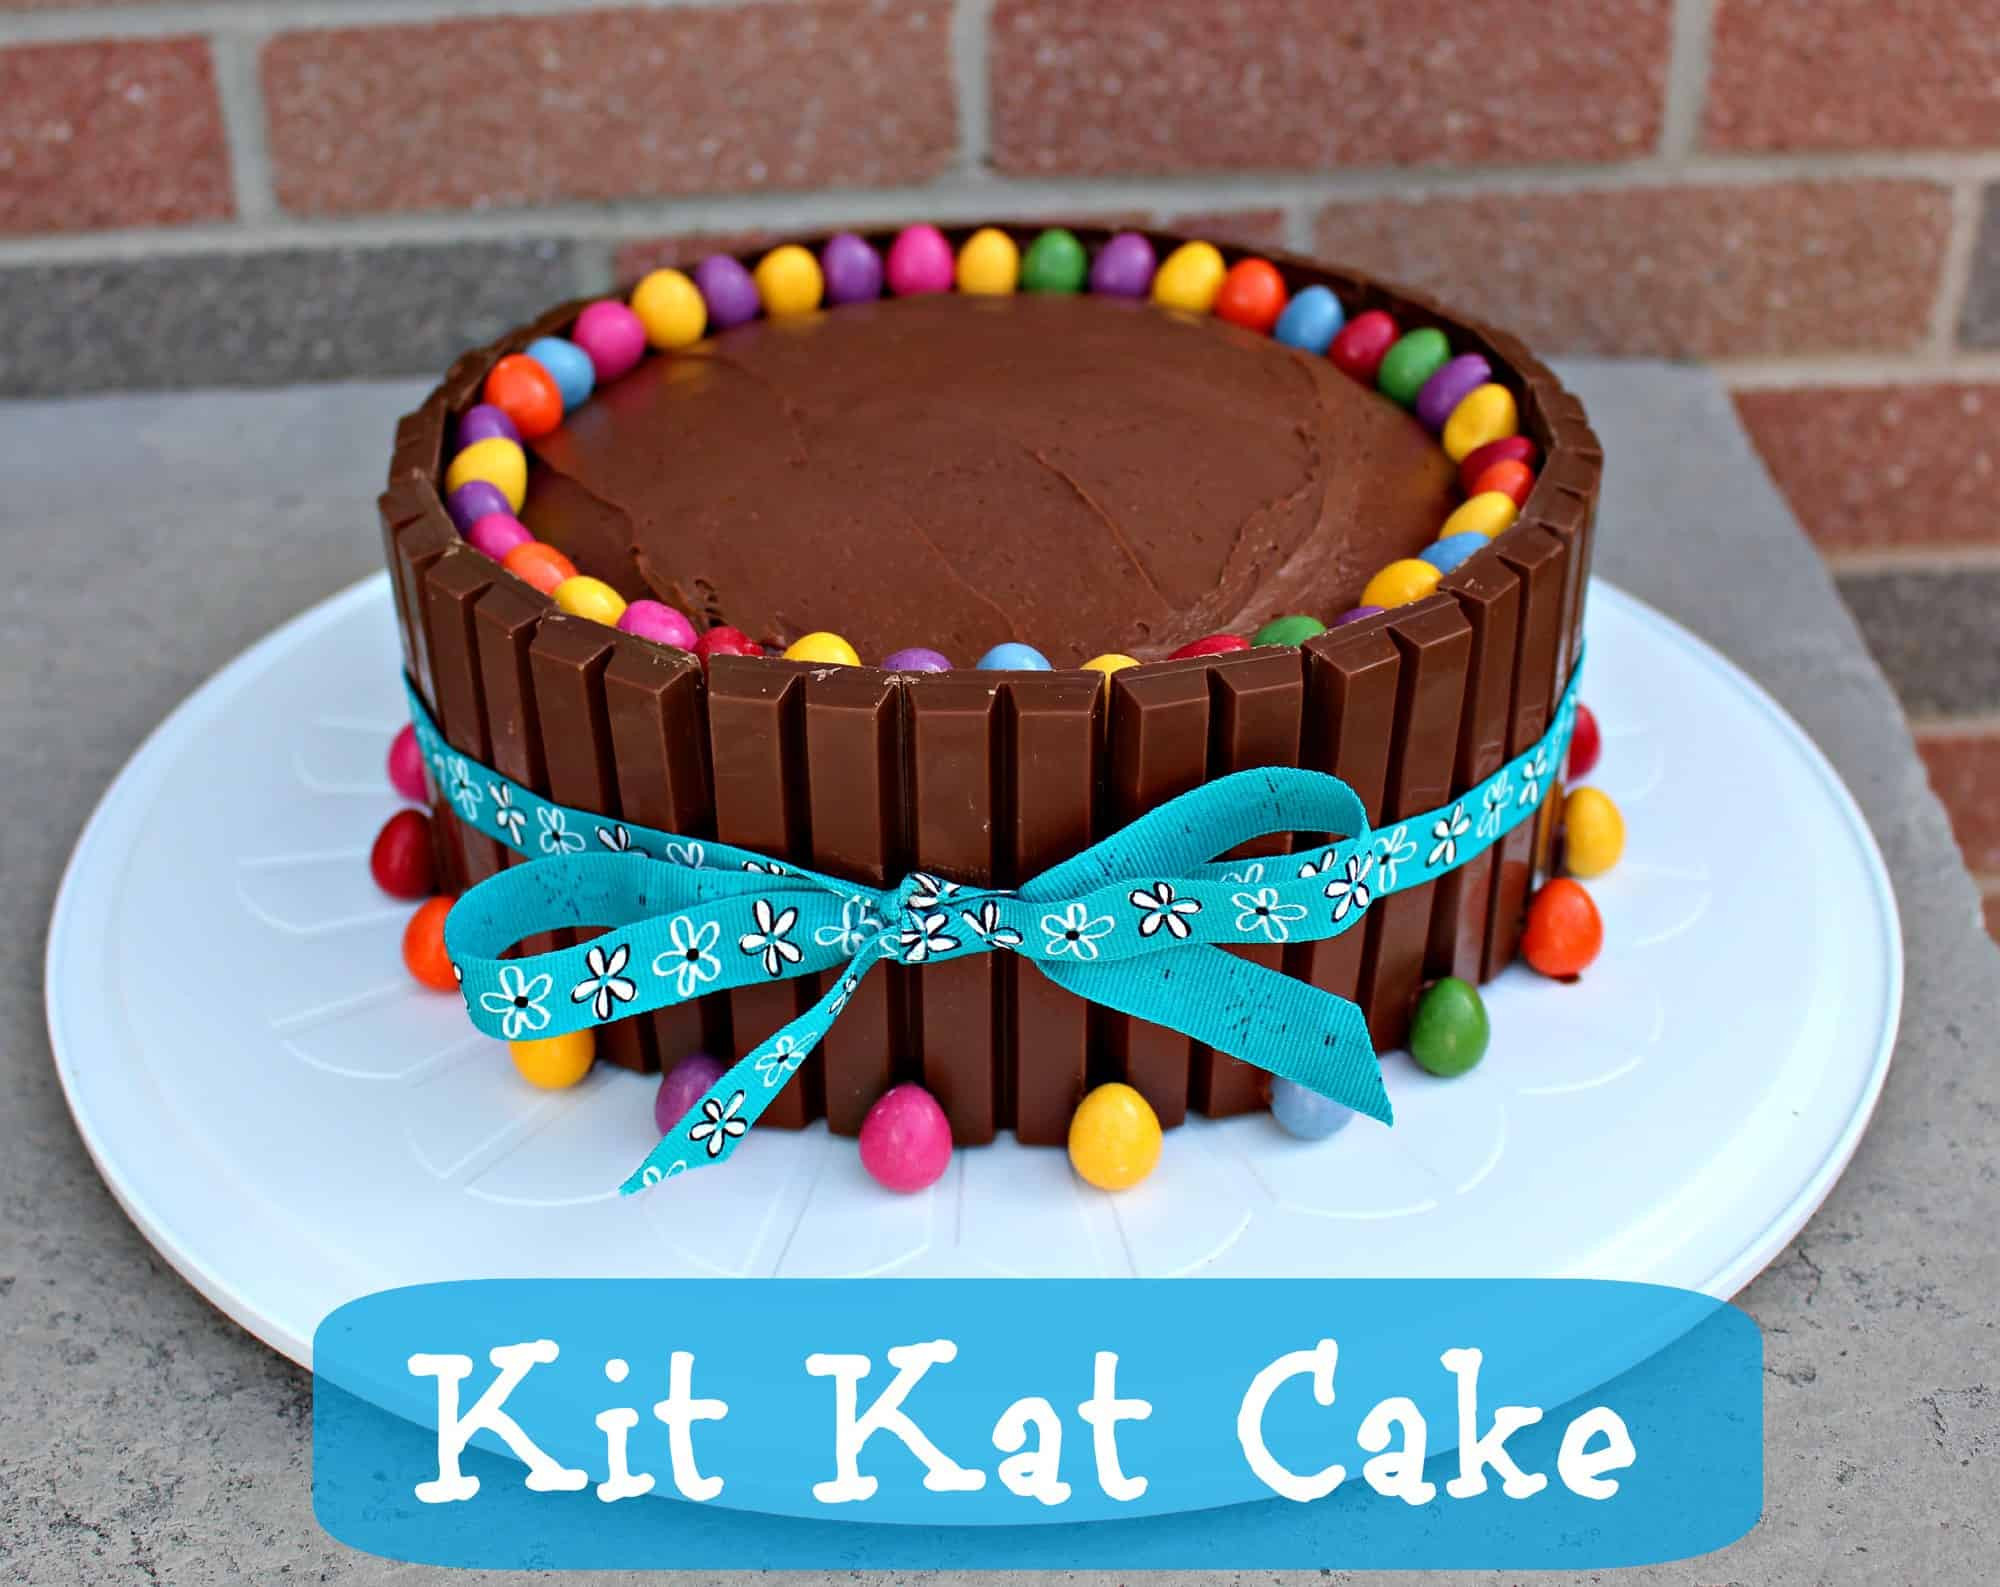 Best ideas about Birthday Cake Design
. Save or Pin Kit Kat Cake Recipe Easy Birthday Cake Idea Now.